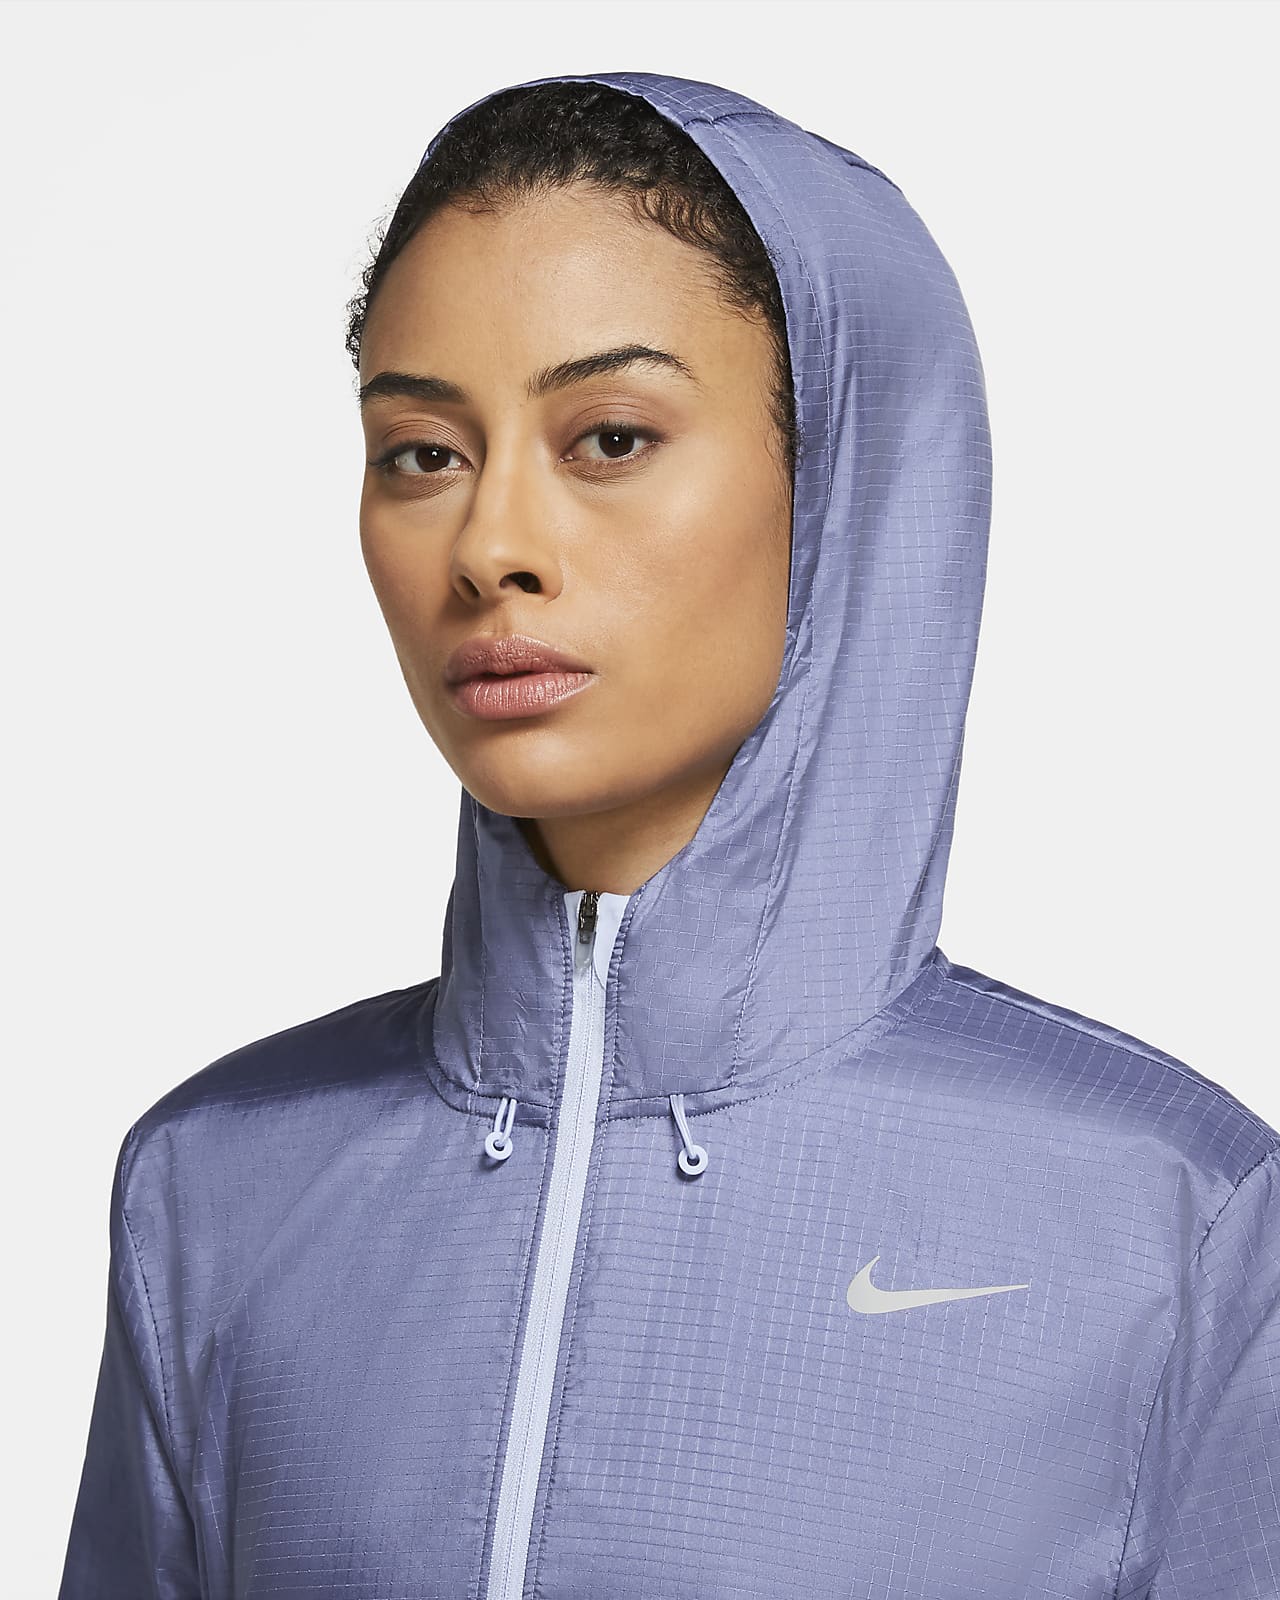 nike essential running jacket women's